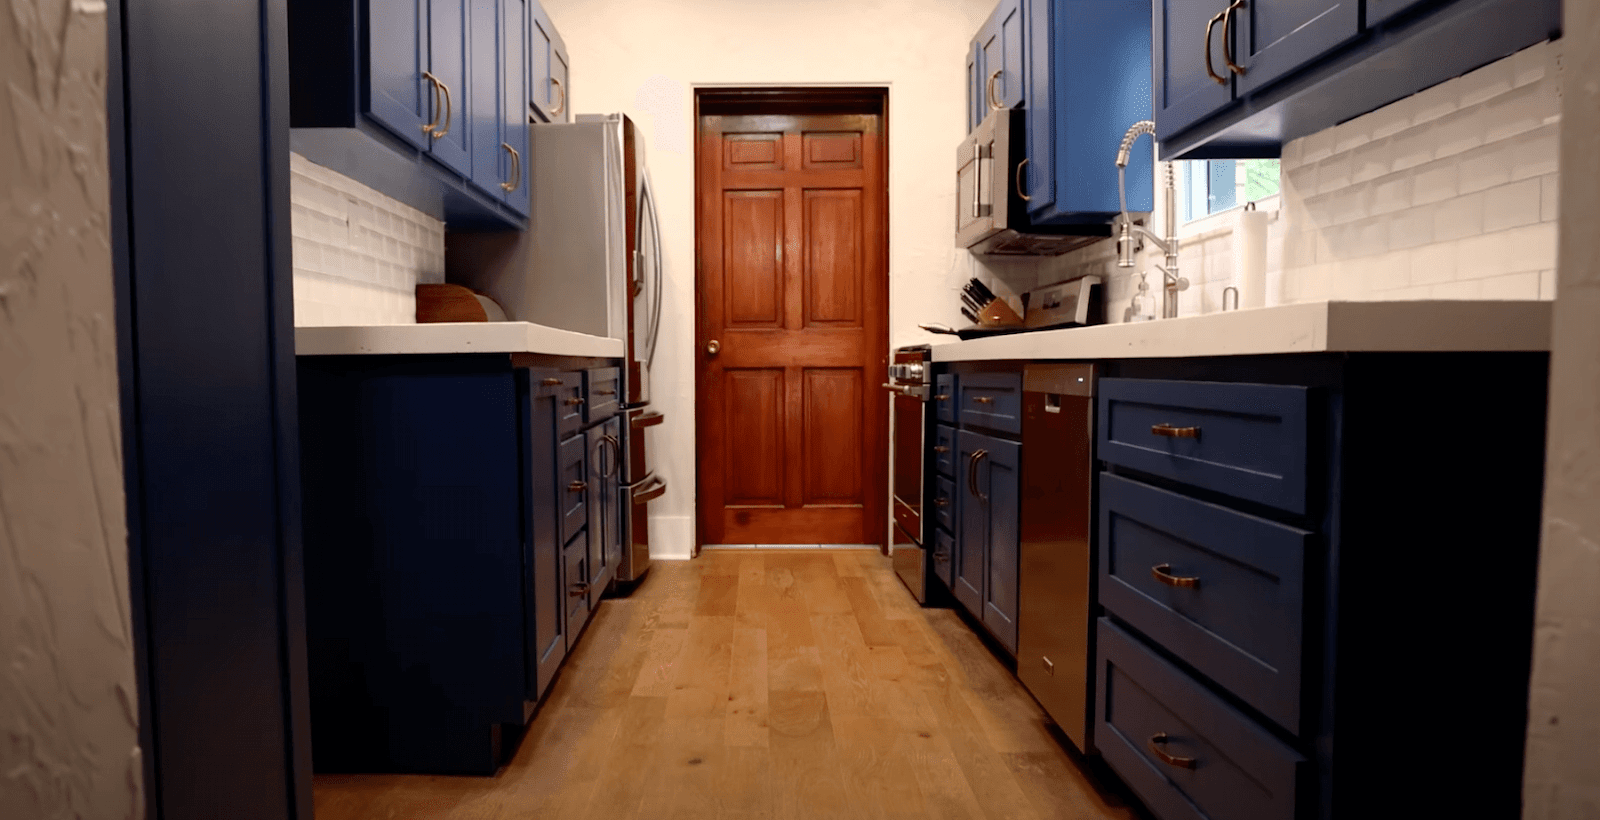 EPIC Full Kitchen Renovation — Start to Finish!